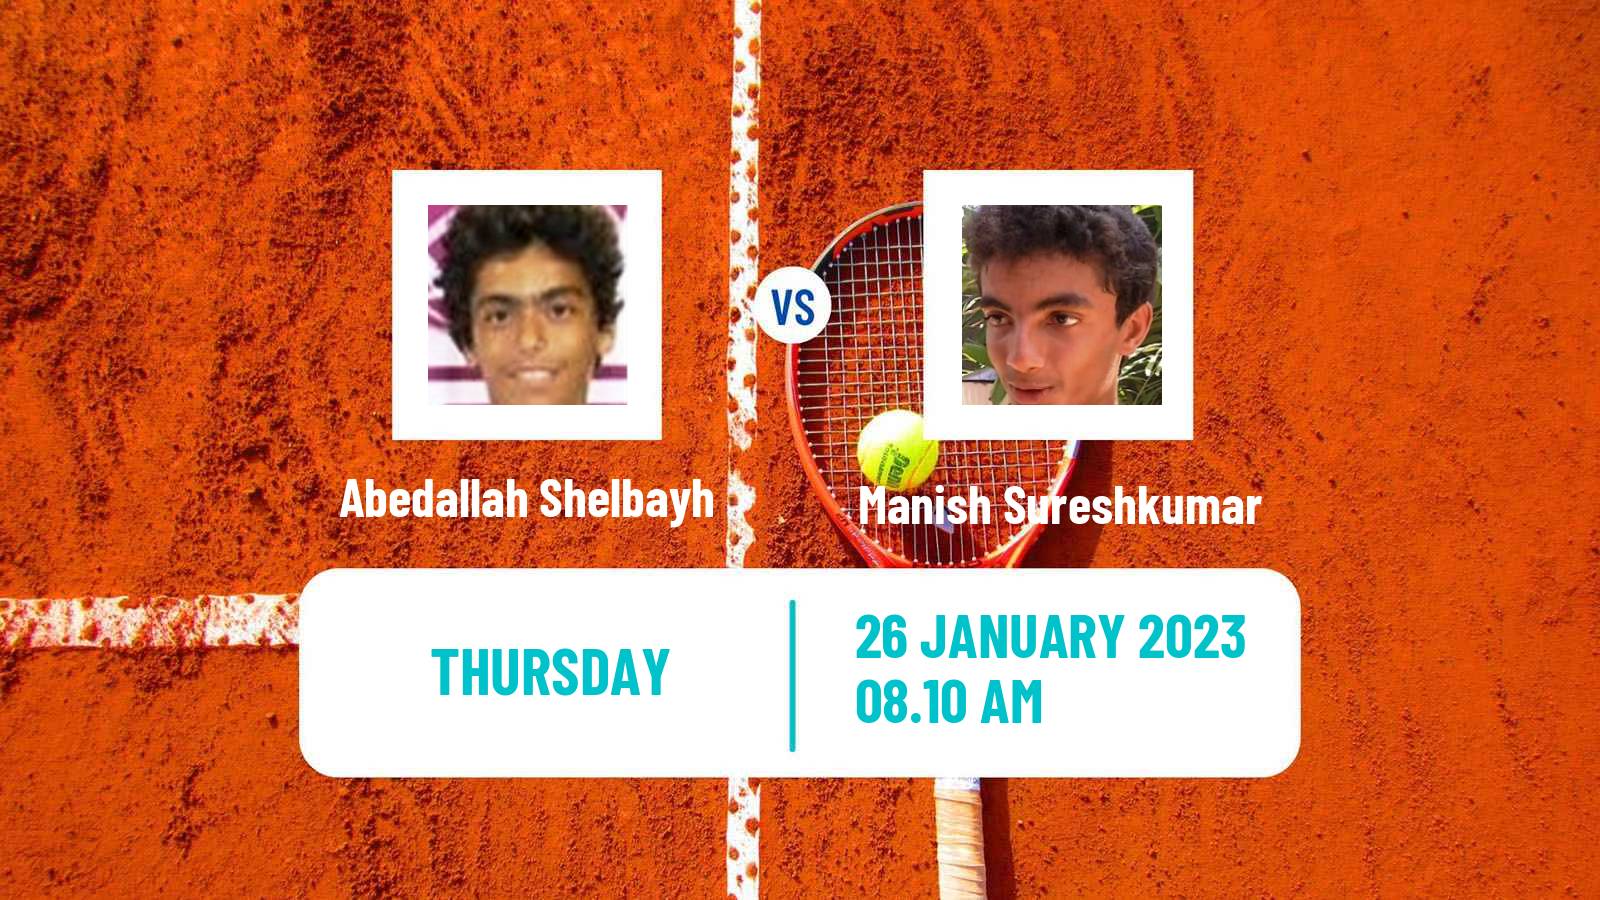 Tennis ITF Tournaments Abedallah Shelbayh - Manish Sureshkumar